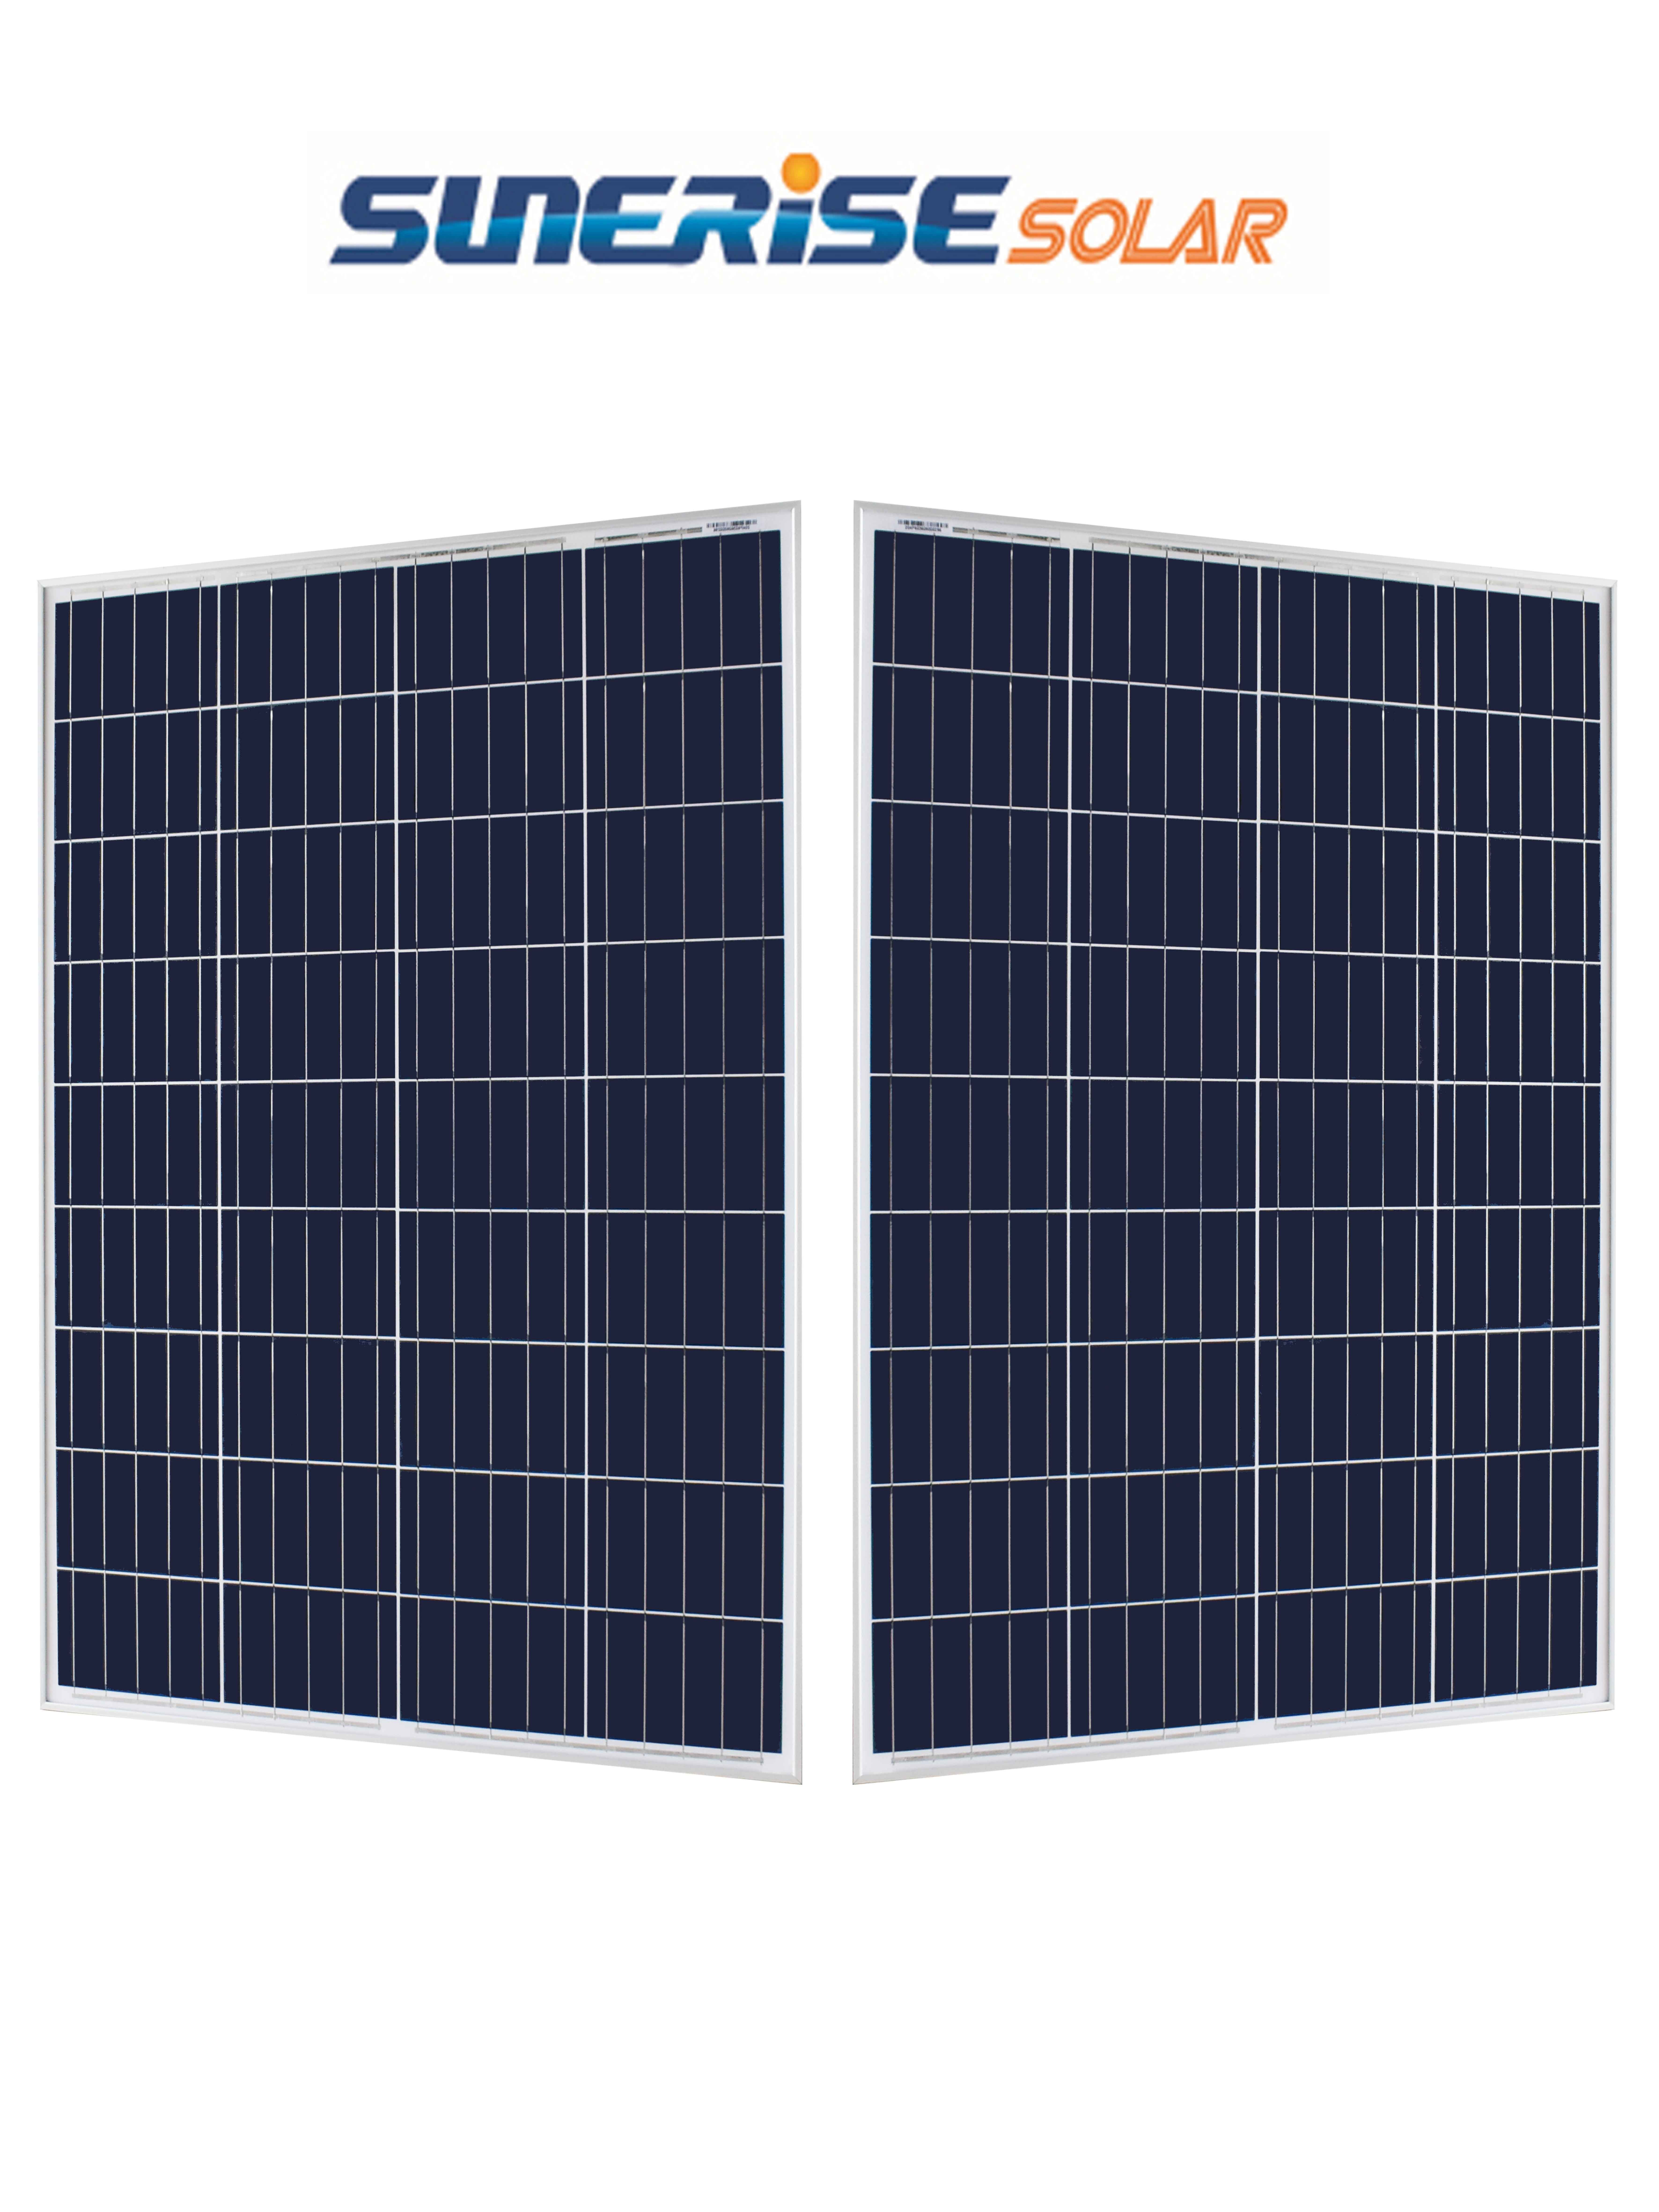 1000*670*25mm 7KG 100W 110W TUV 18V Solar Panel